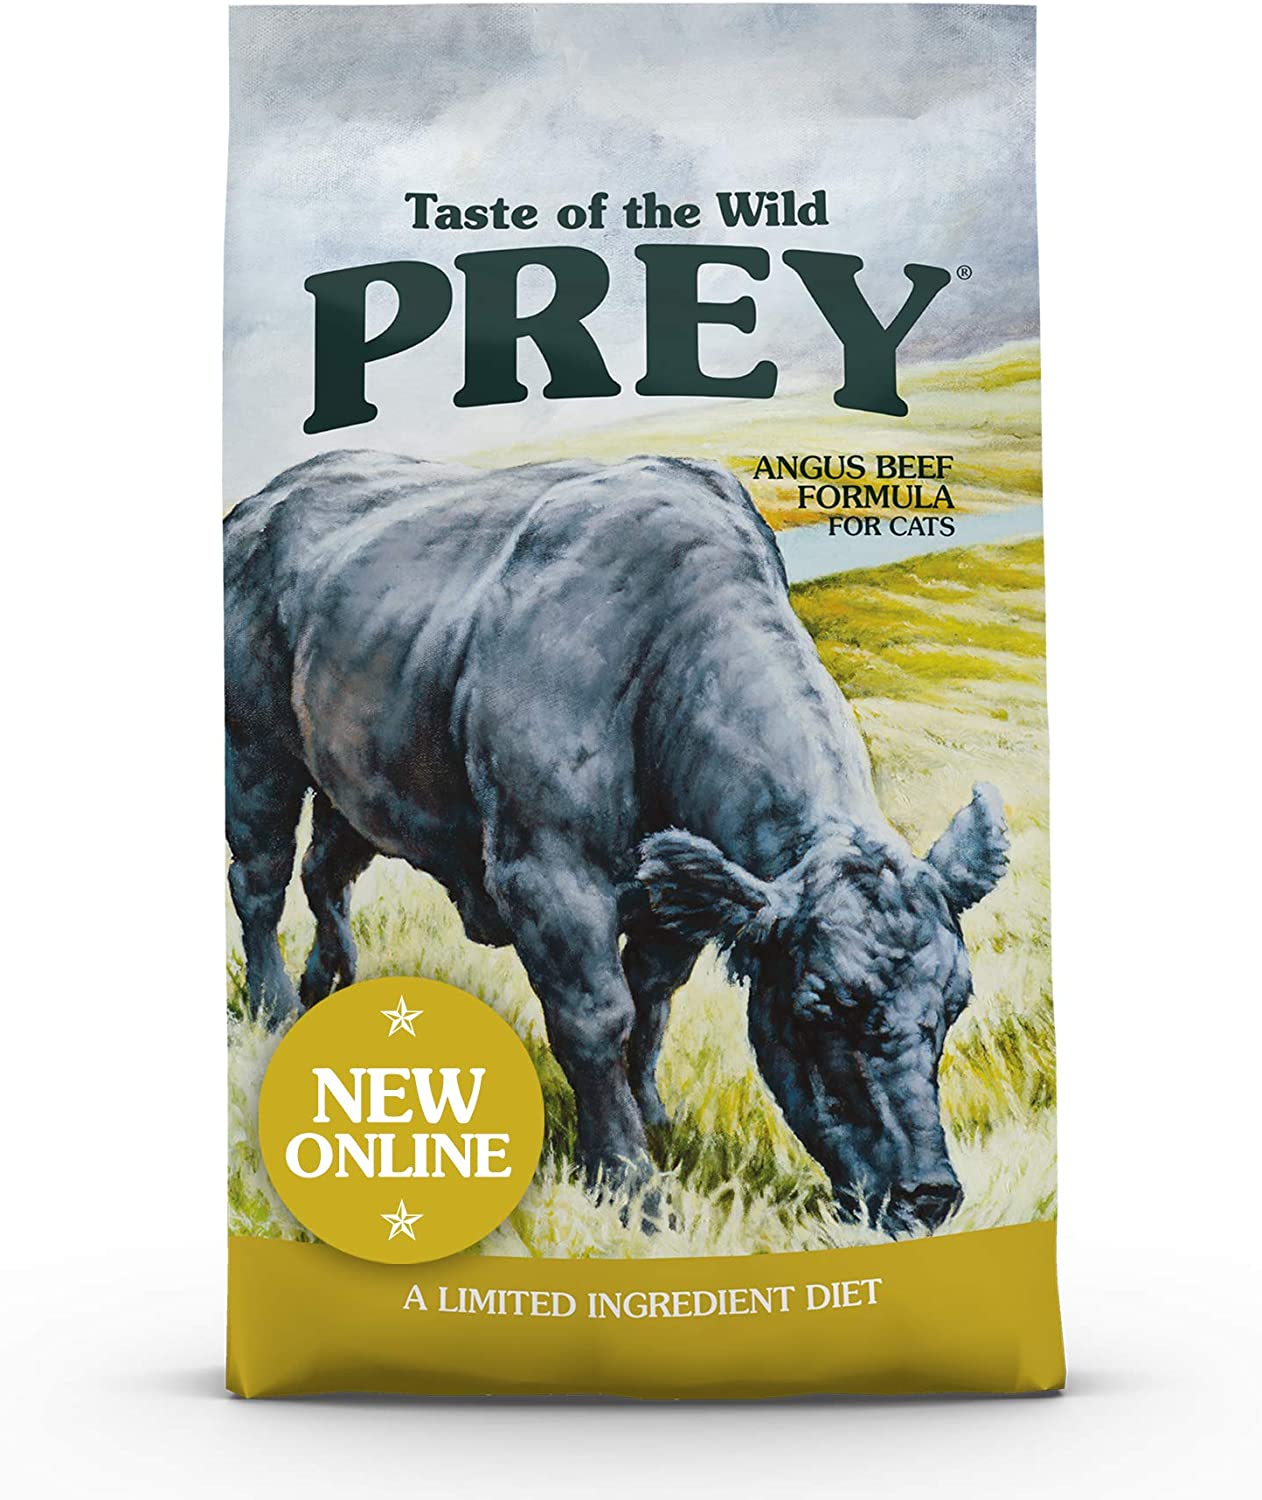 PREY taste of the wild angus beef kattenvoer review